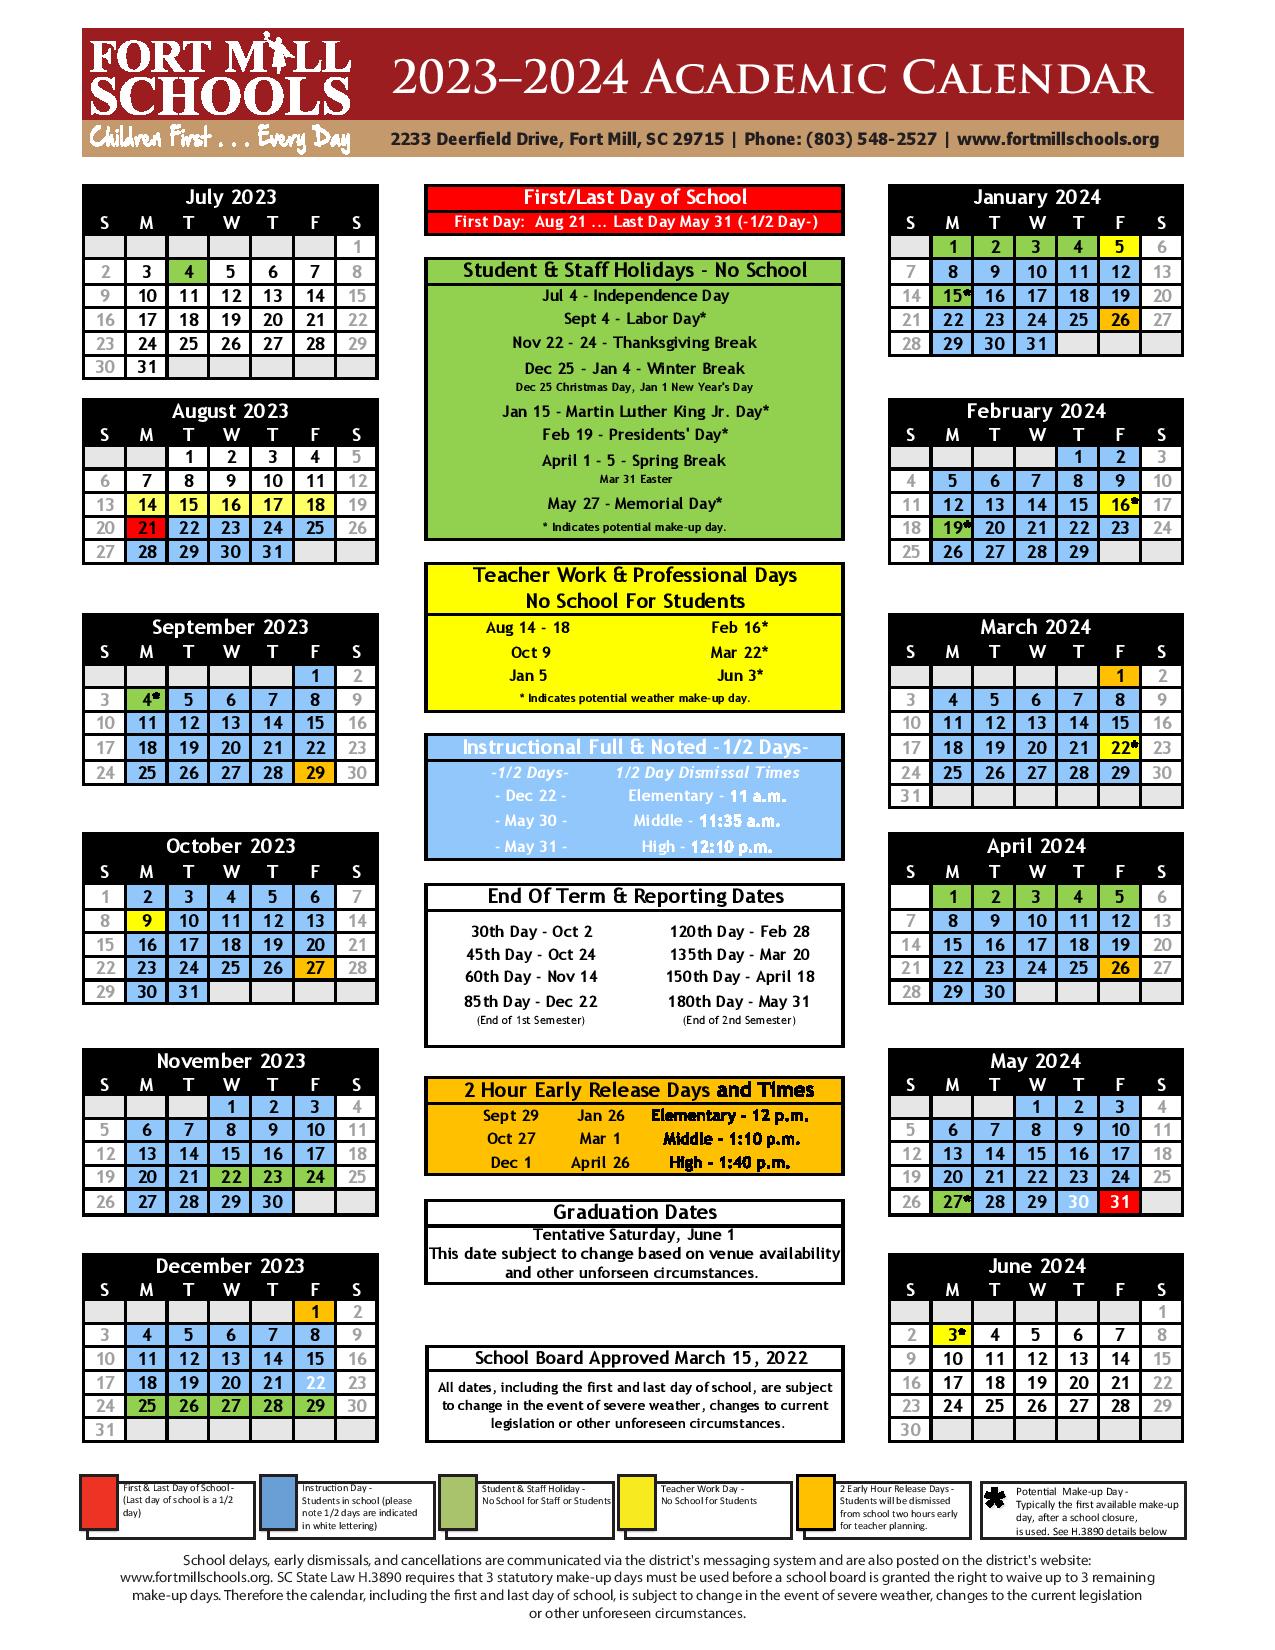 fort-mill-school-district-calendar-2023-2024-in-pdf-school-calendar-info